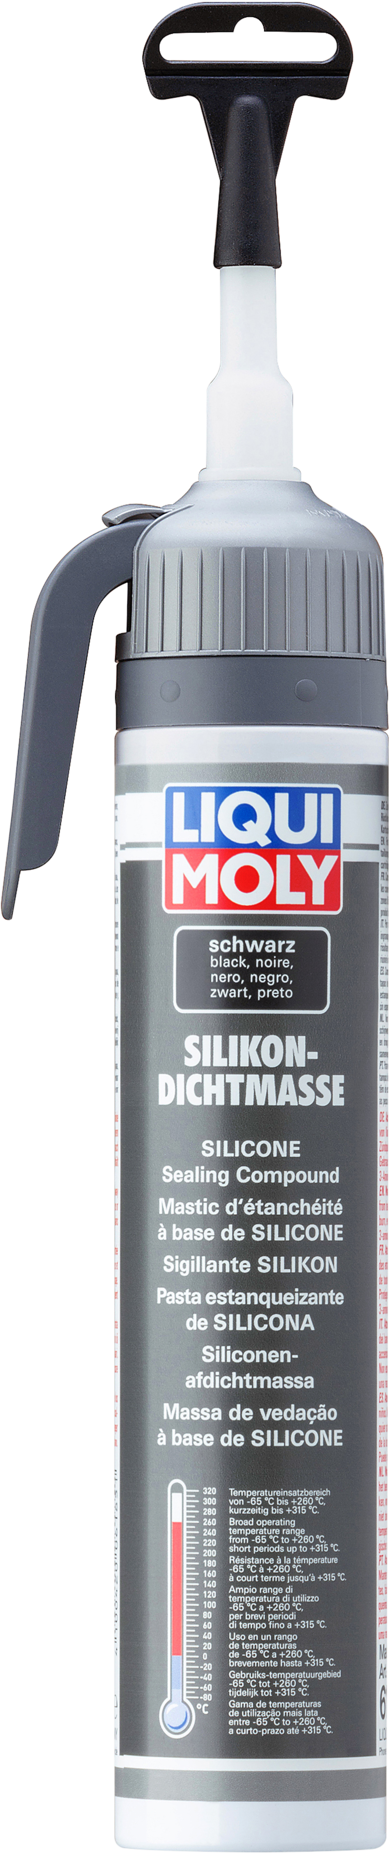 Liqui Moly Siliconen-afdichtmassa zwart, 200 ml